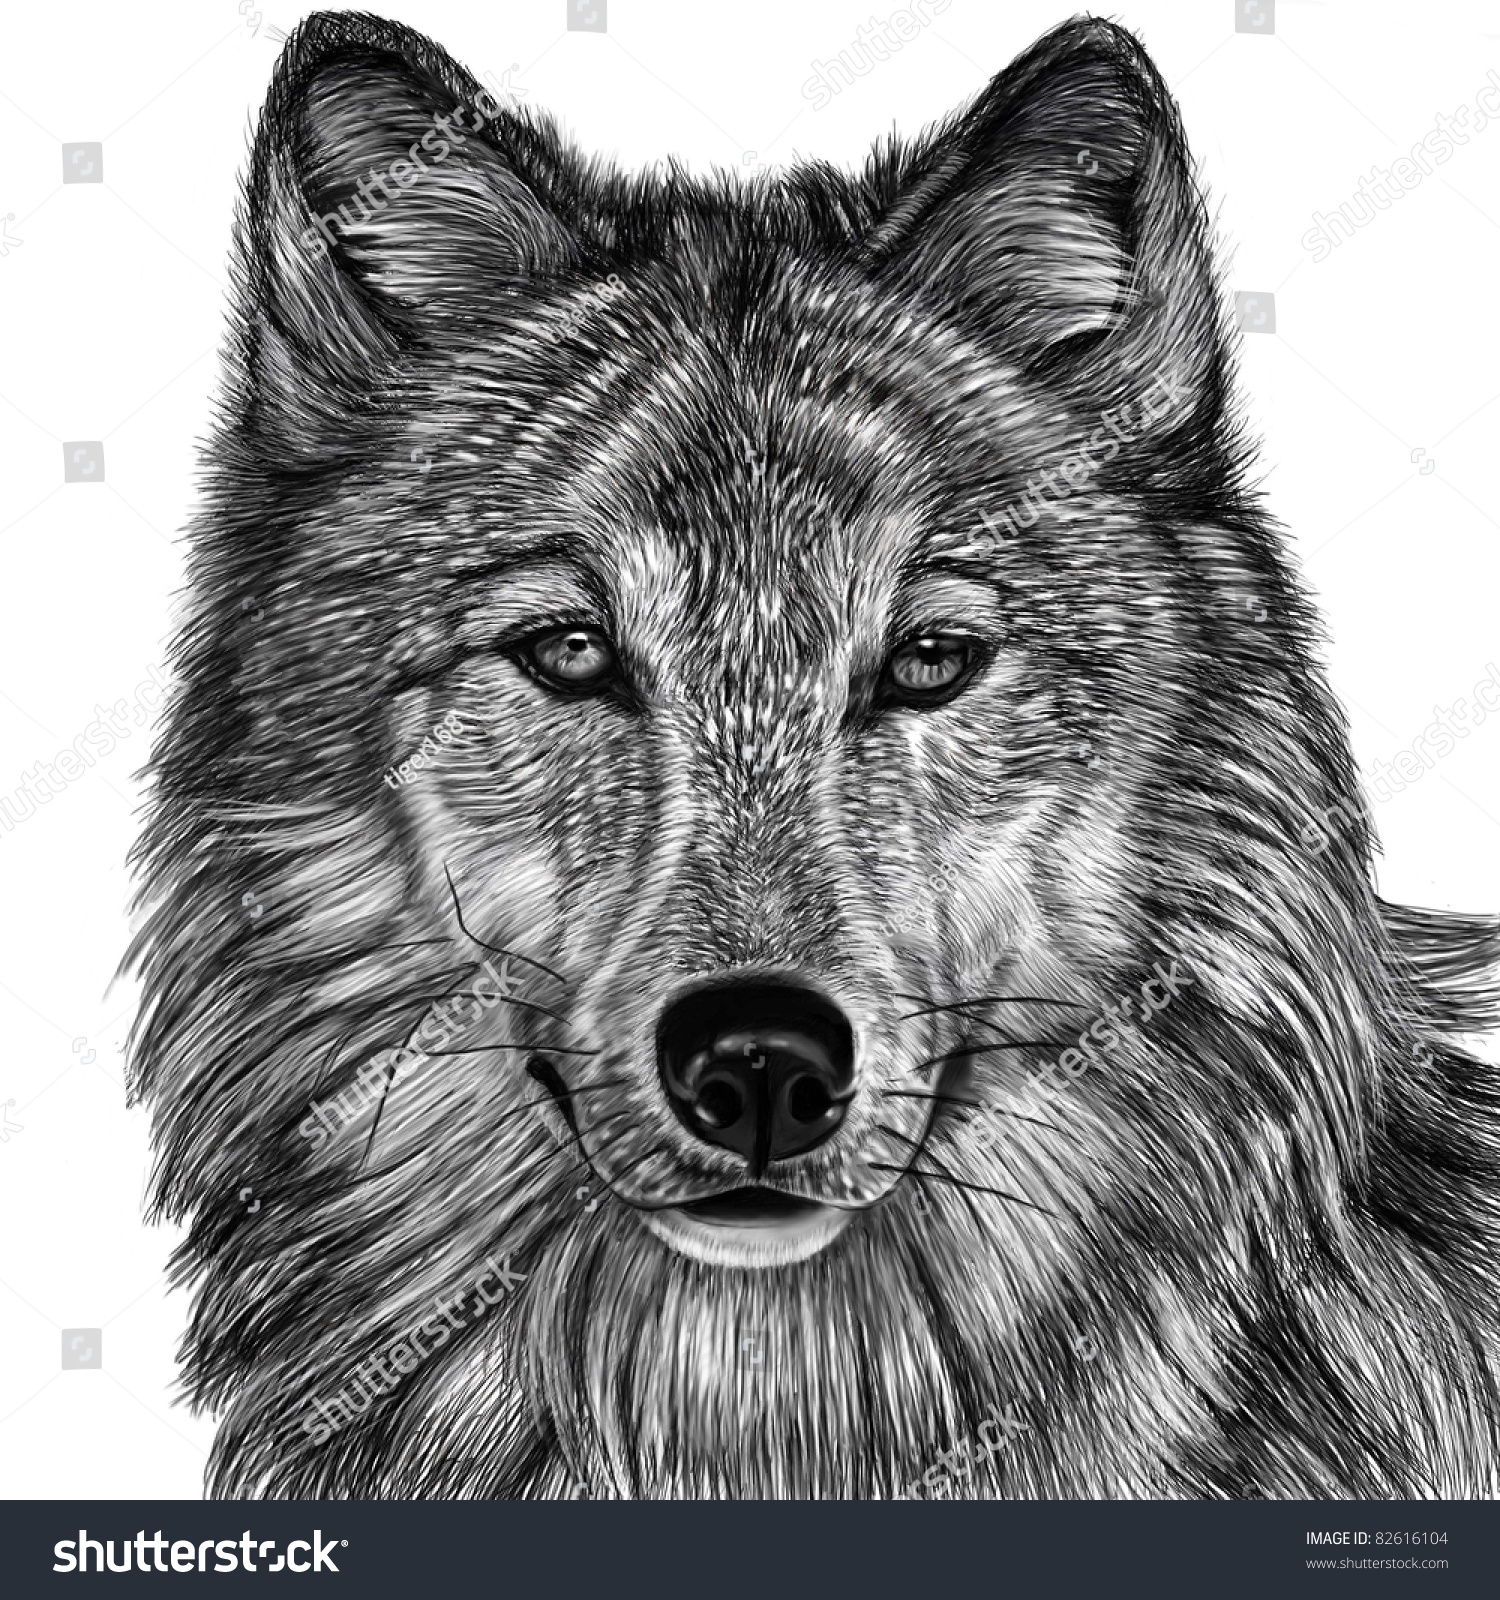 Wolf Stock Photo 82616104 : Shutterstock